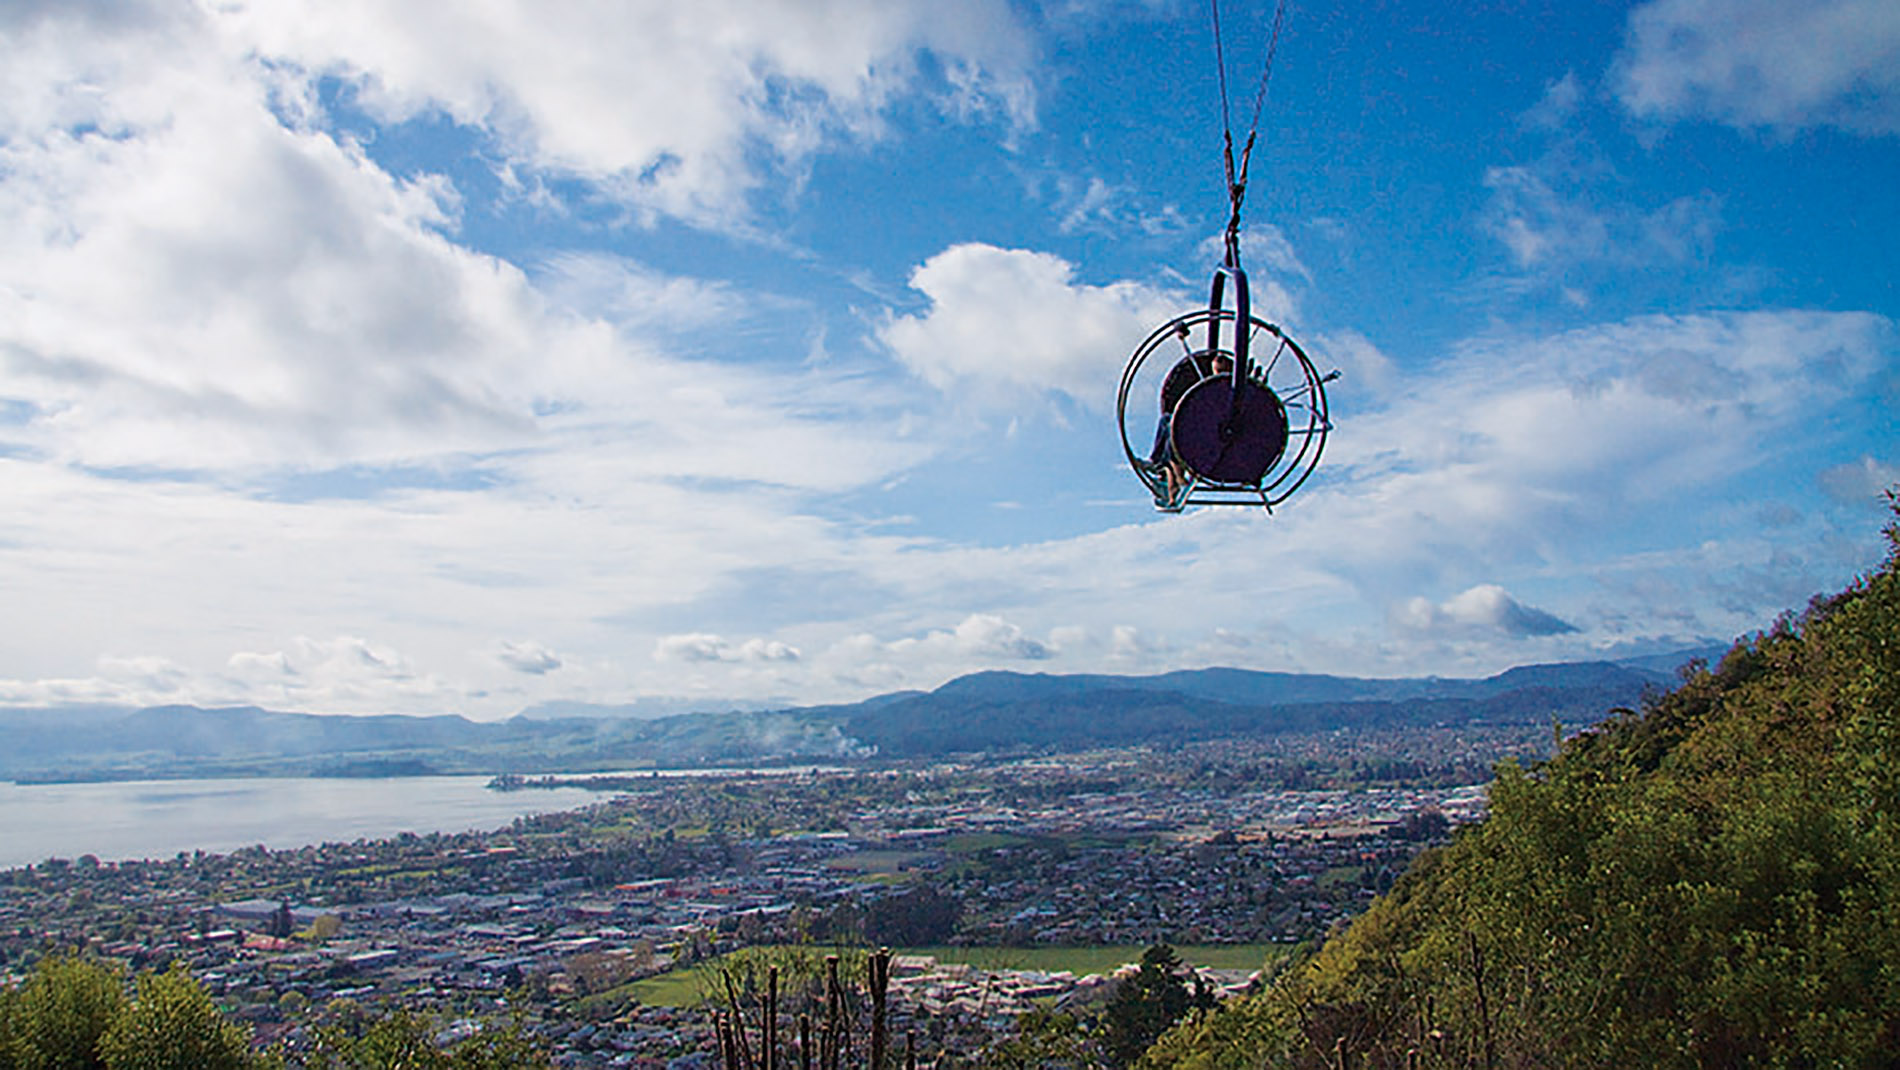 Rotorua adventures await on New Zealand's North Island | CNN Travel